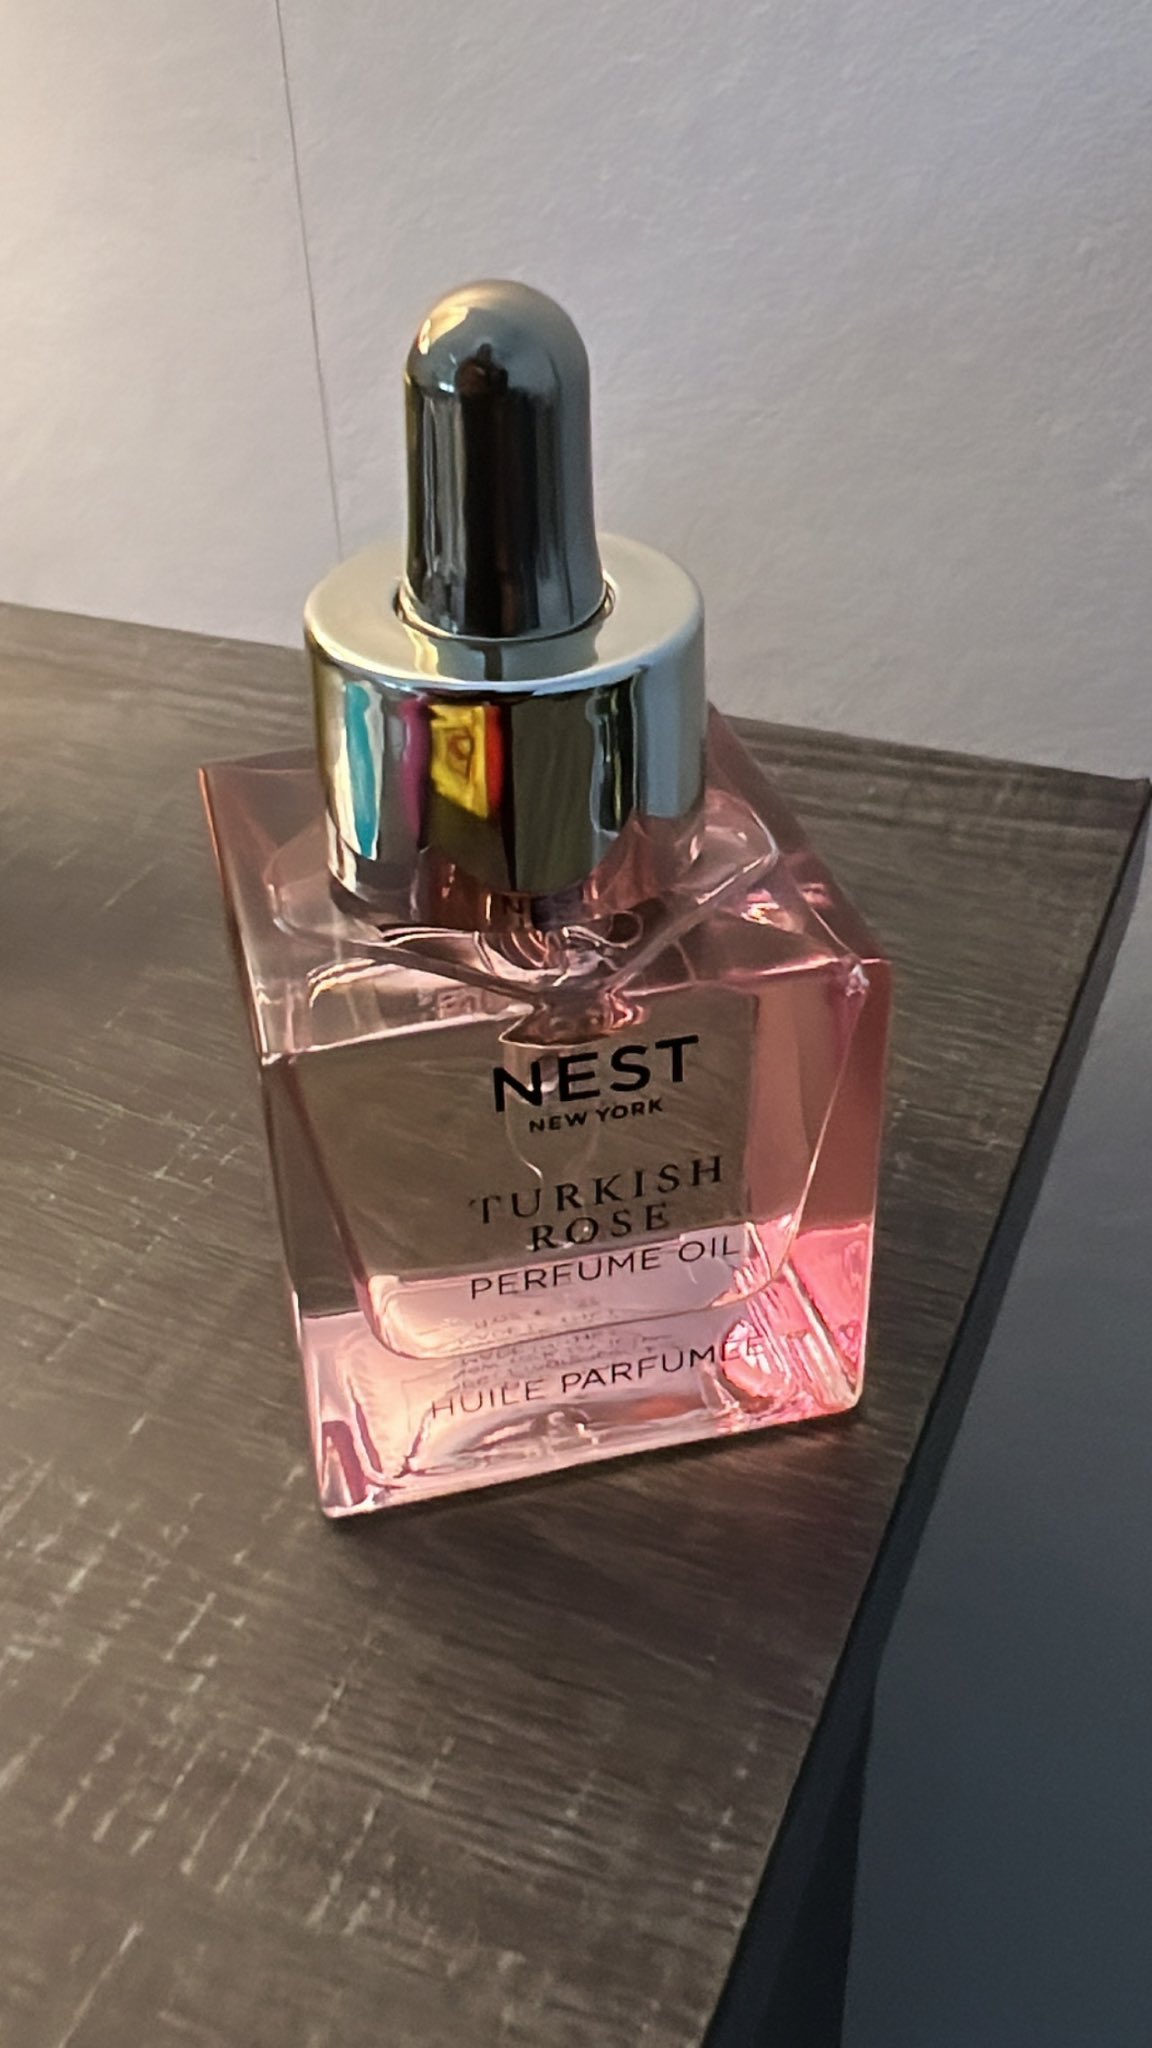 Nest New York Madagascar Vanilla Perfume Oil - 30 ml